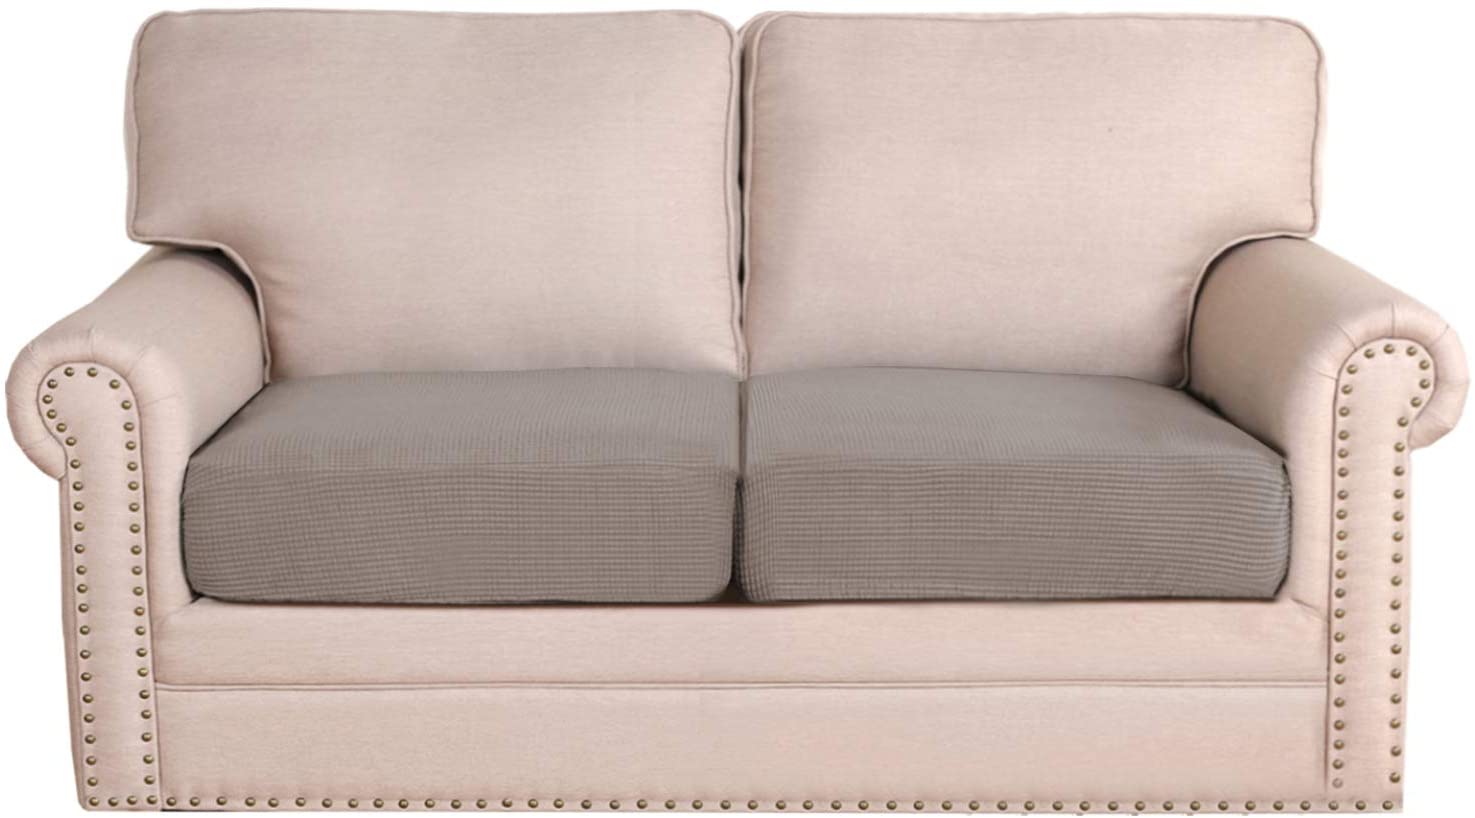 H.VERSAILTEX Super Stretch Individual Seat Cushion Covers Sofa Covers Couch  Cush | eBay